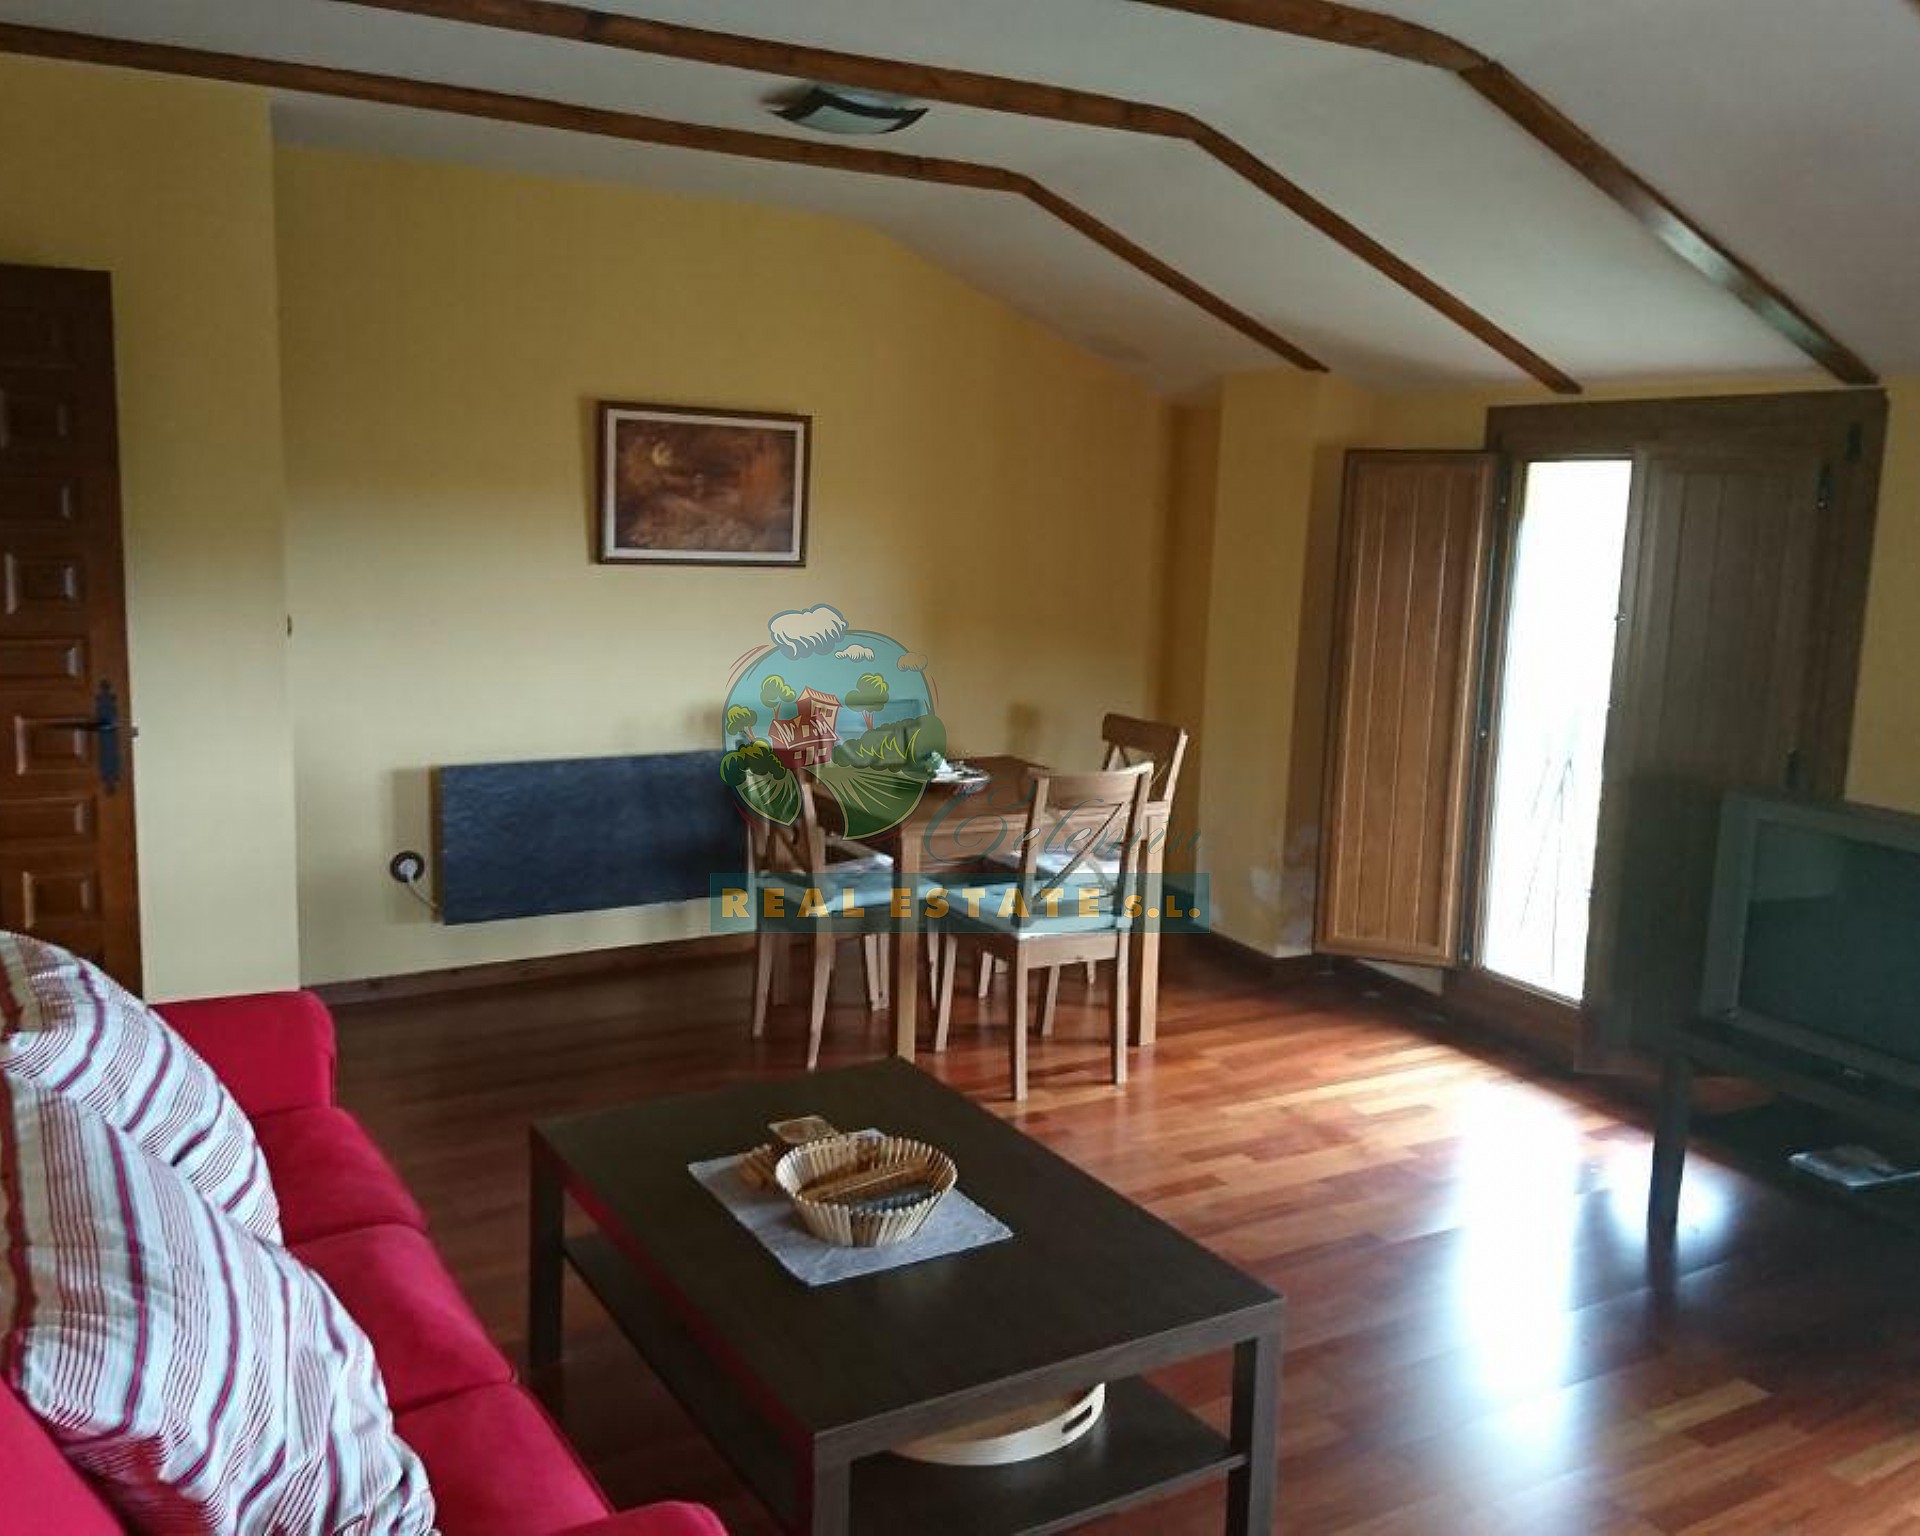 Furnished apartment in Sierra de Bejar.